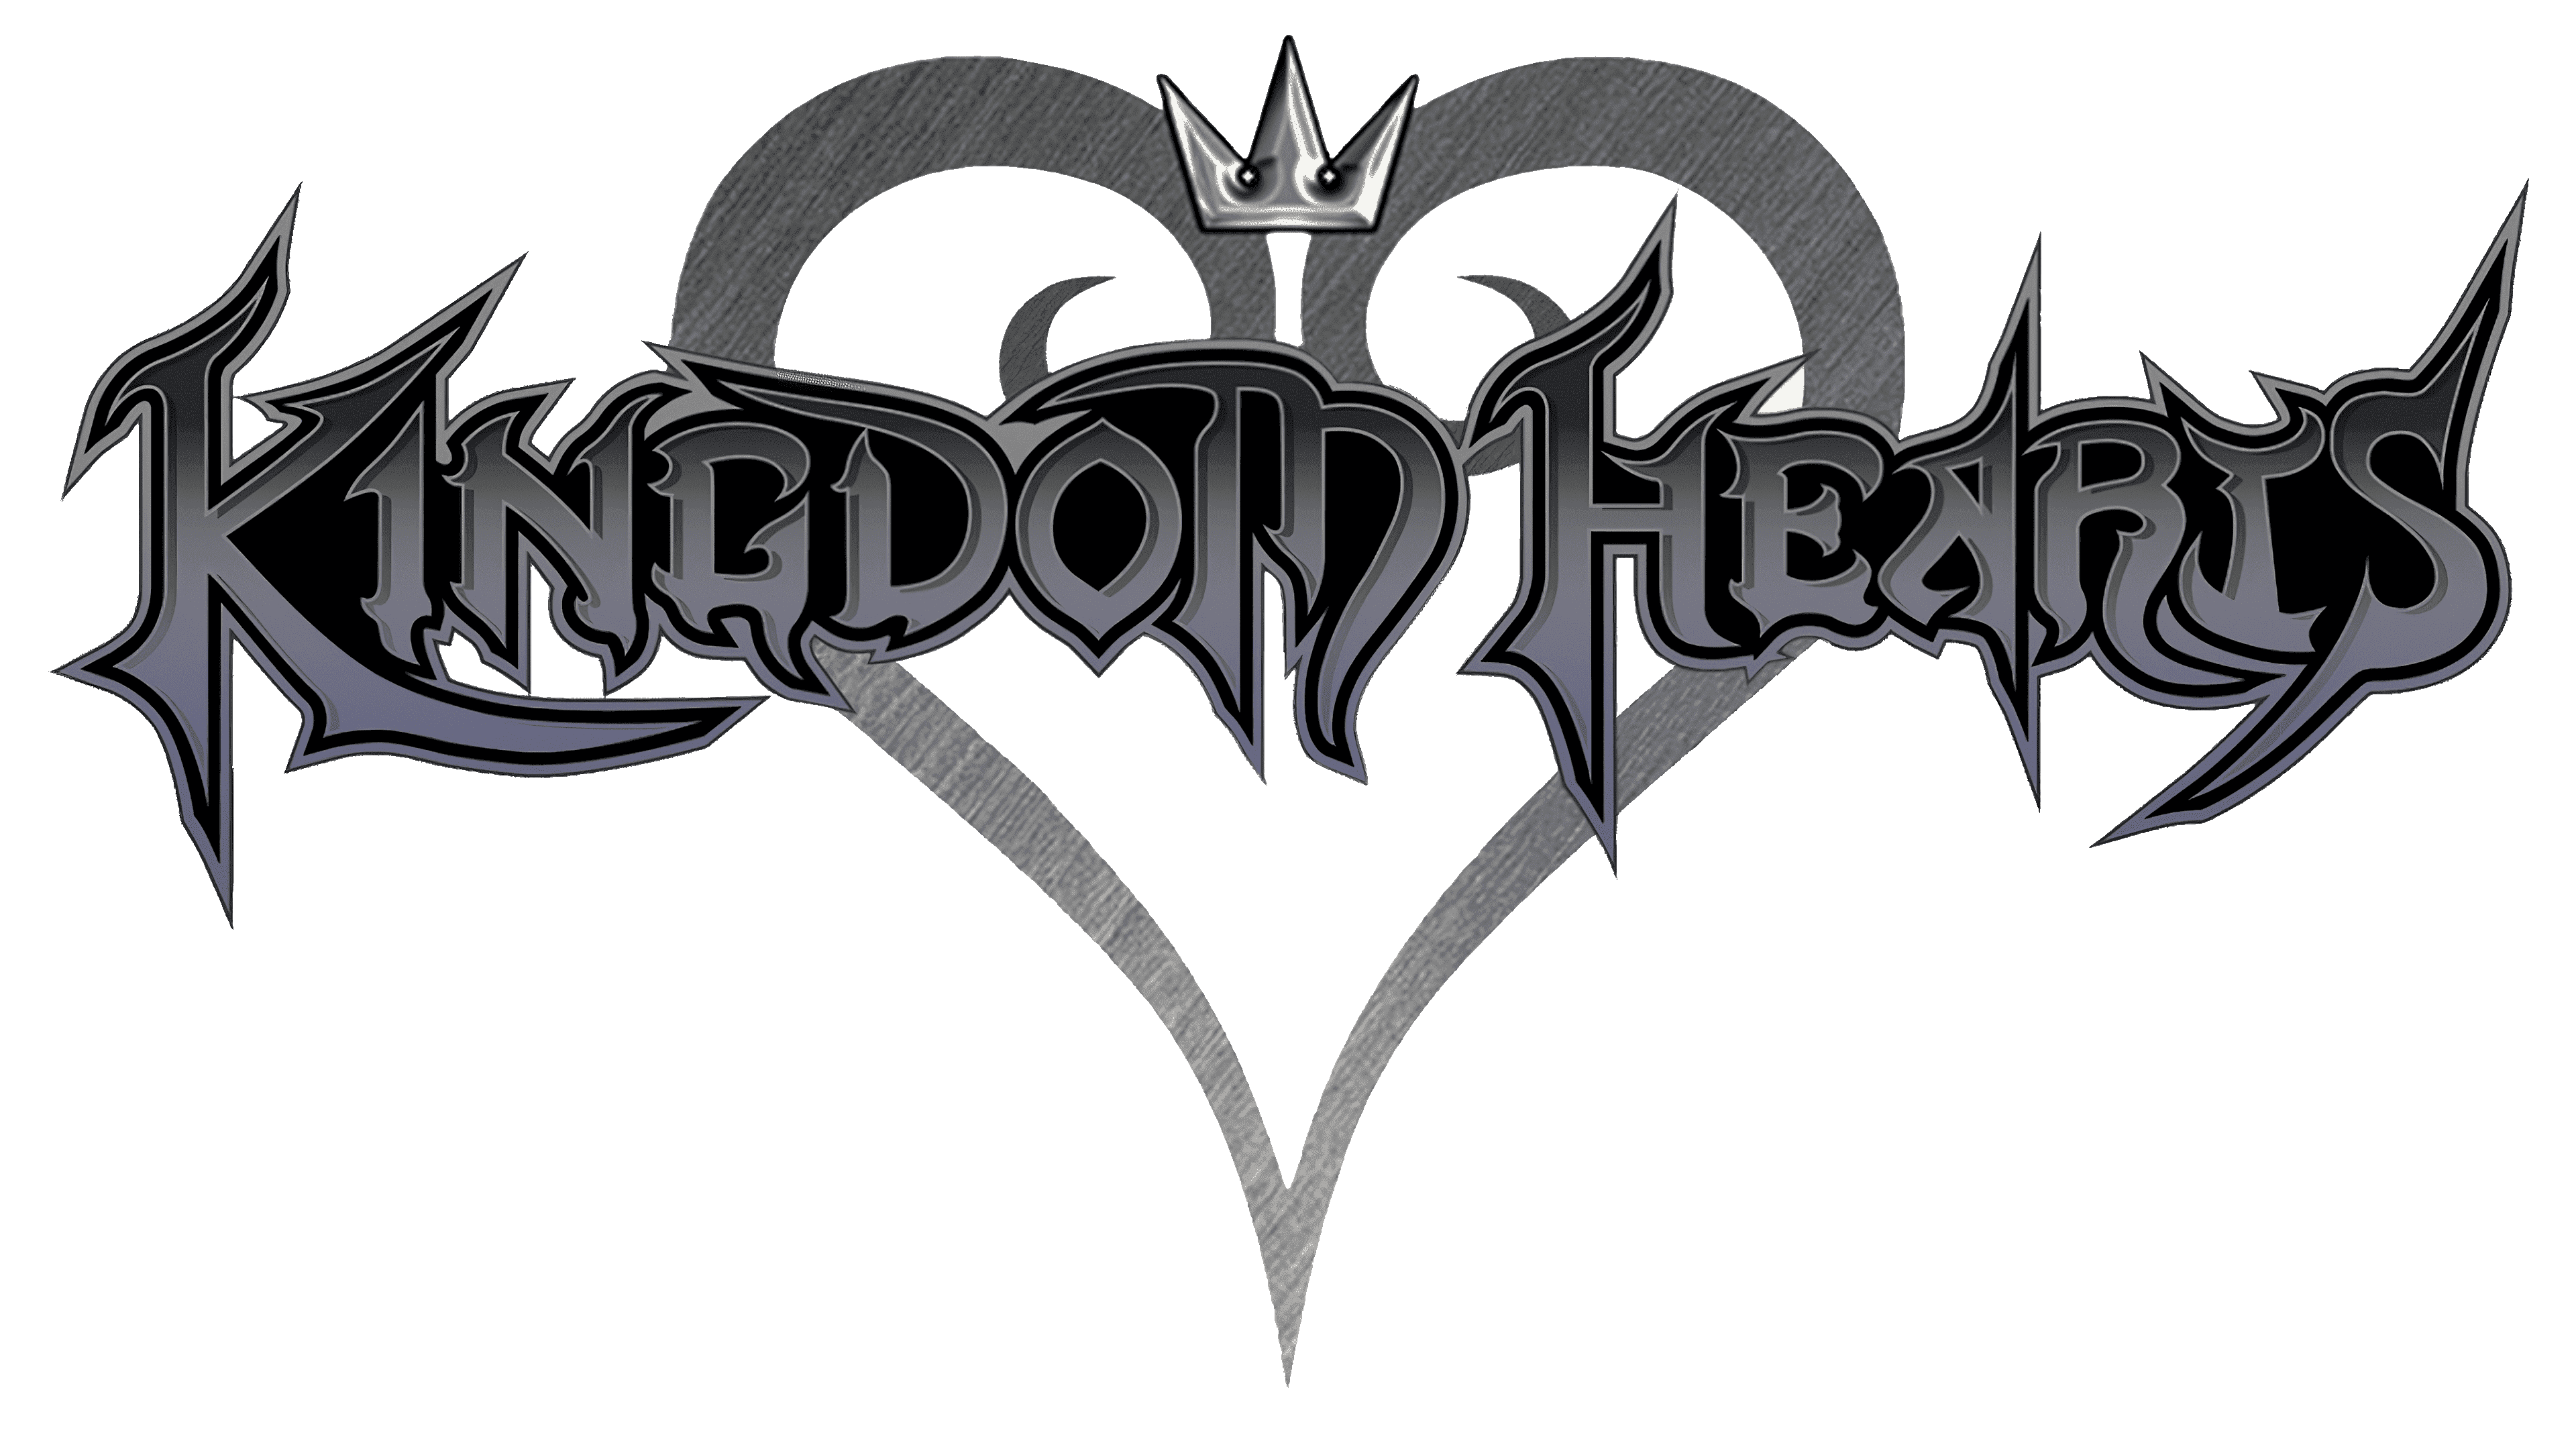 Kingdom Hearts II - Kingdom Hearts Wiki, the Kingdom Hearts encyclopedia - wide 6